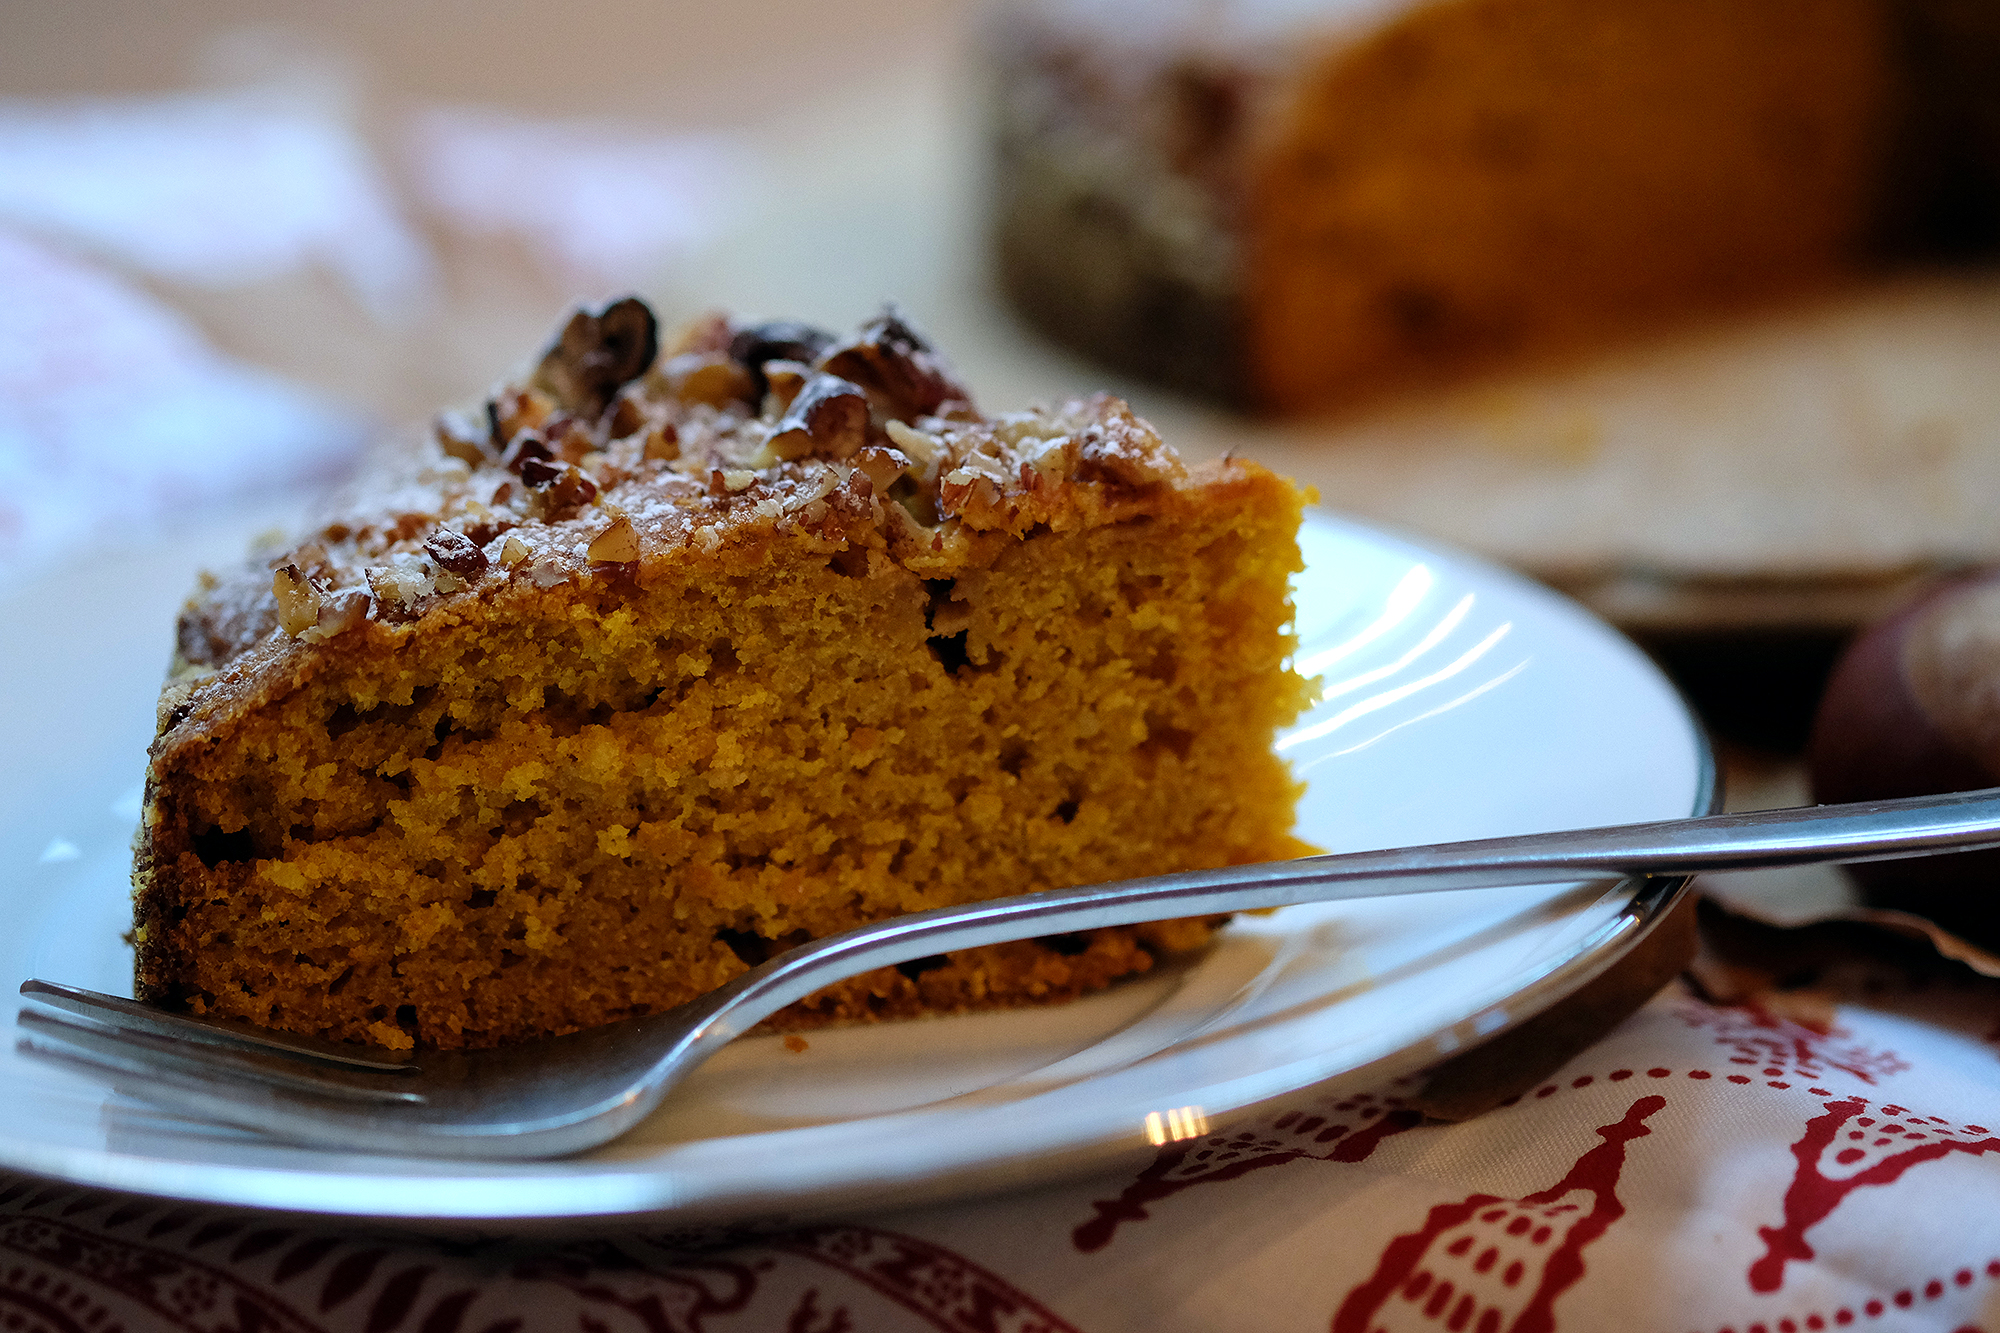 A recipe – Spiced pumpkin and pecan cake